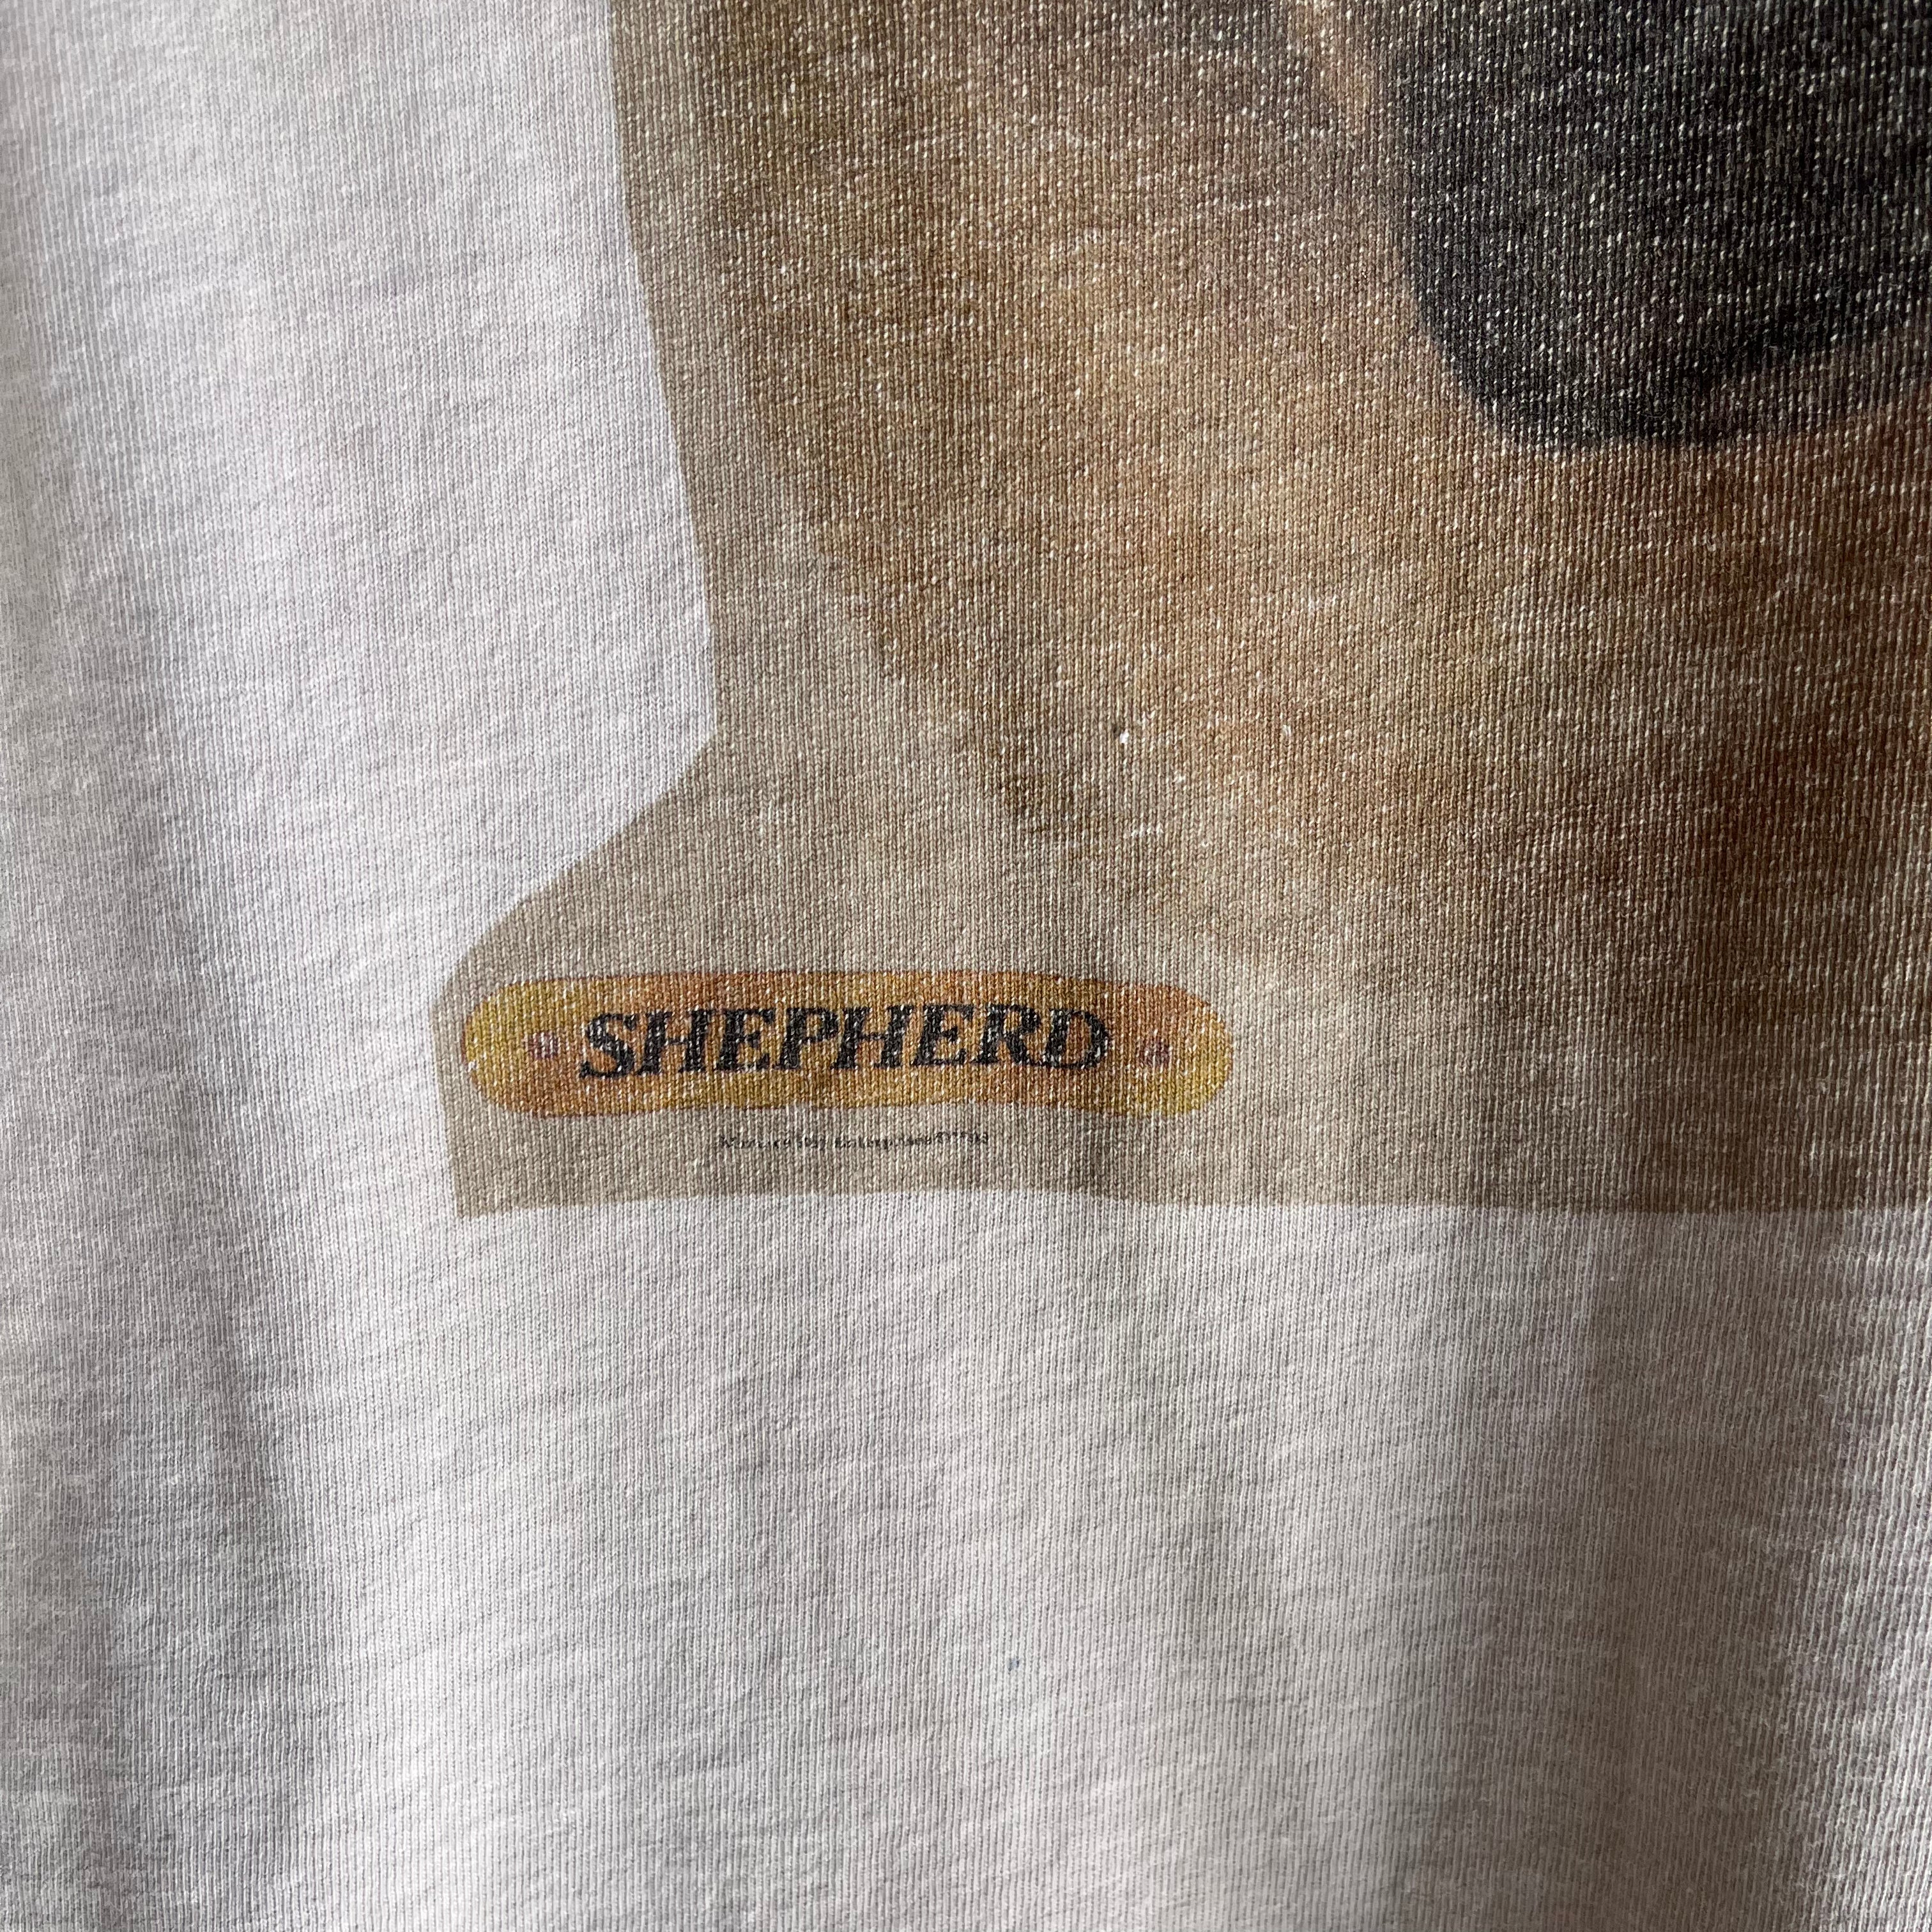 1990s Goodest Buddy German Shepard Dusty Off White T-Shirt